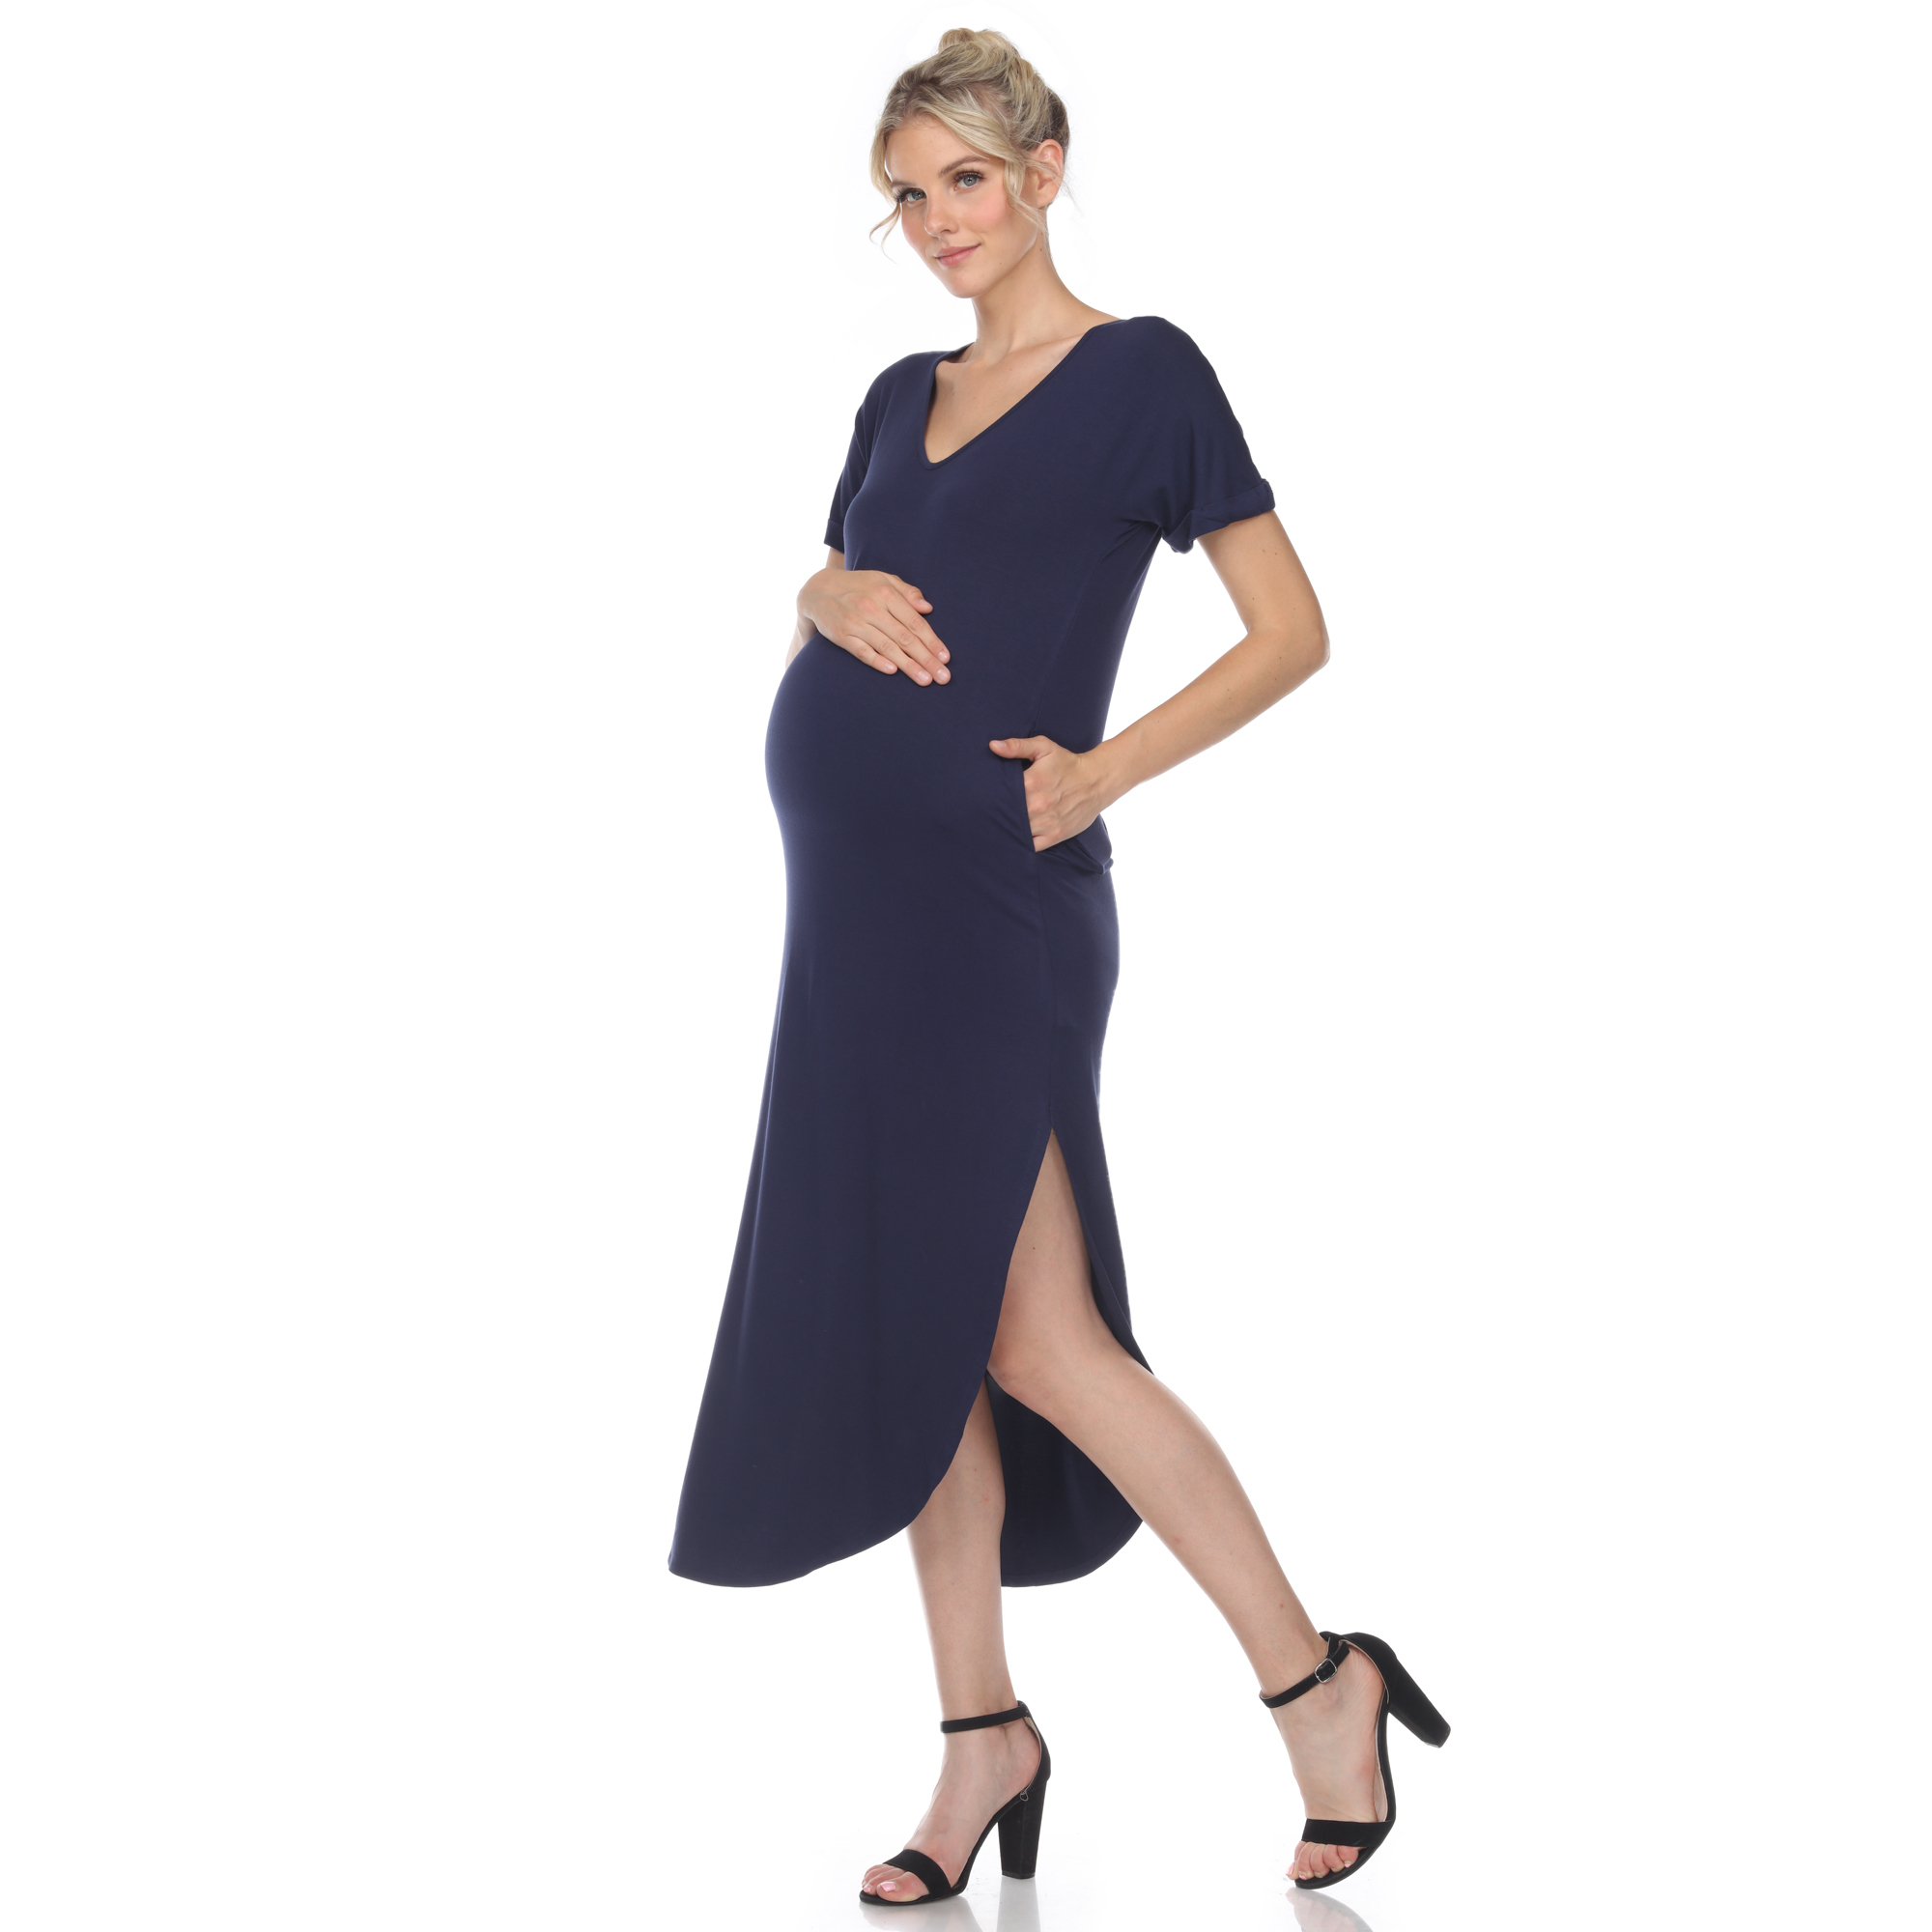 White Mark Womenâs Maternity V-neck Maxi Dress - Charcoal, 3X